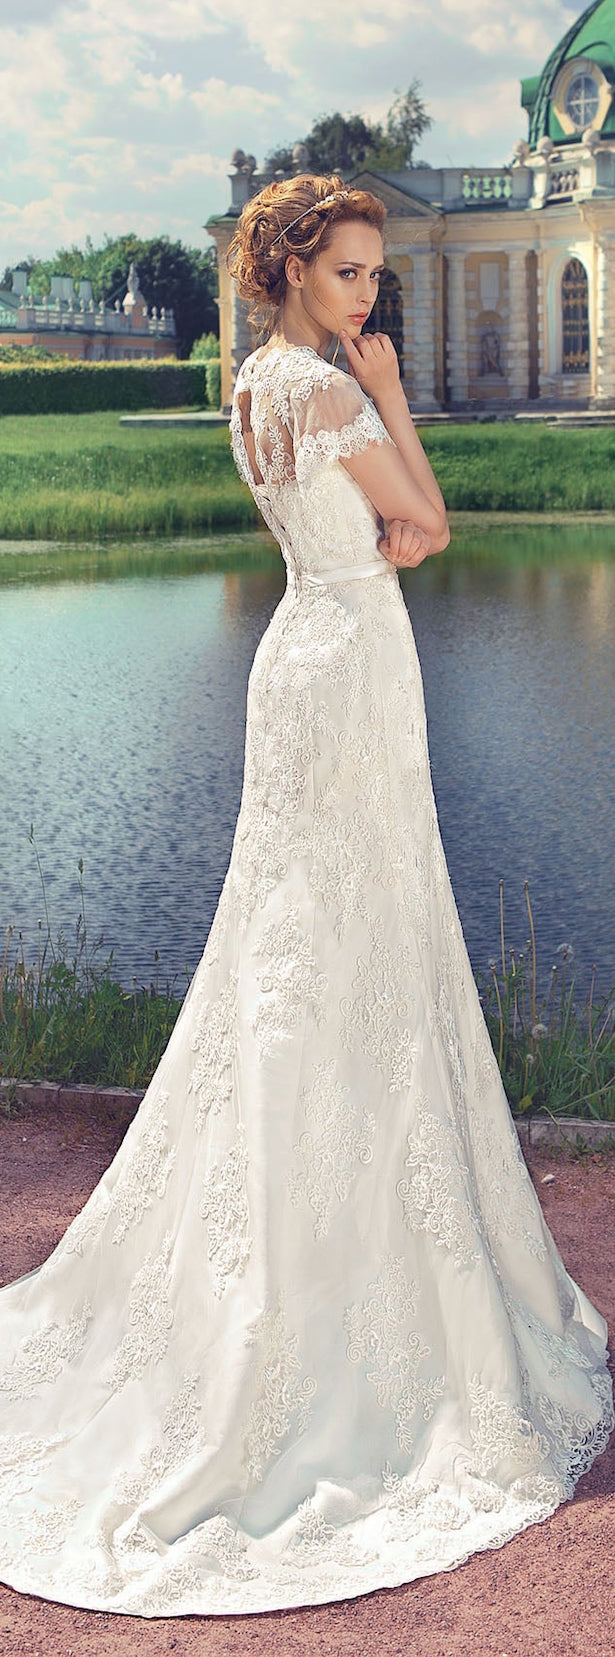 Milva 2016 Wedding Dresses - Fairy Gardens Collection ...